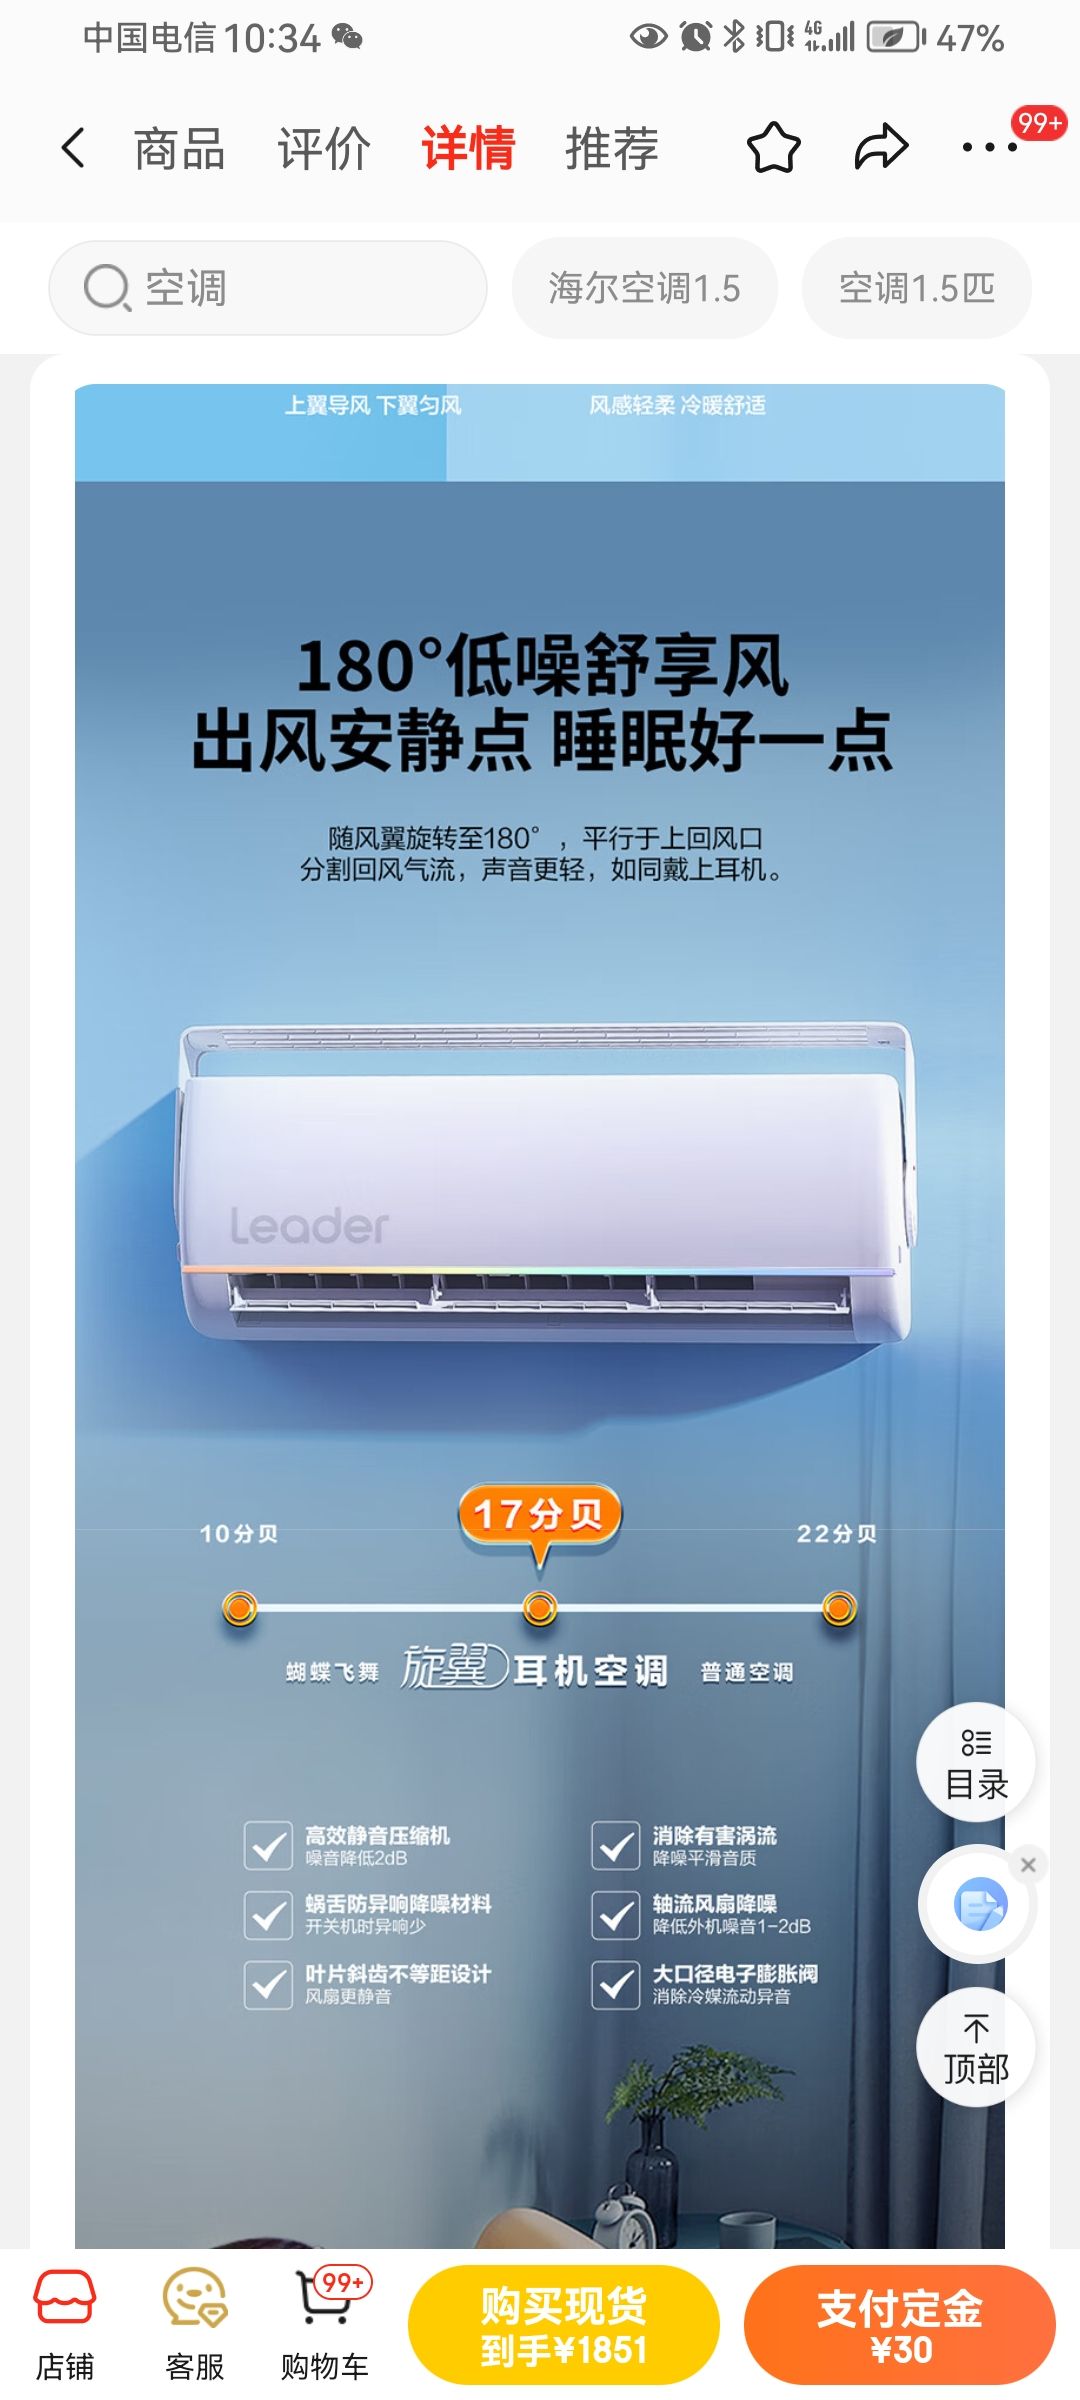 Leader 海尔智家出品 空调挂机1.5匹 变频新一级能效冷暖 一键防直吹 无线Wifi